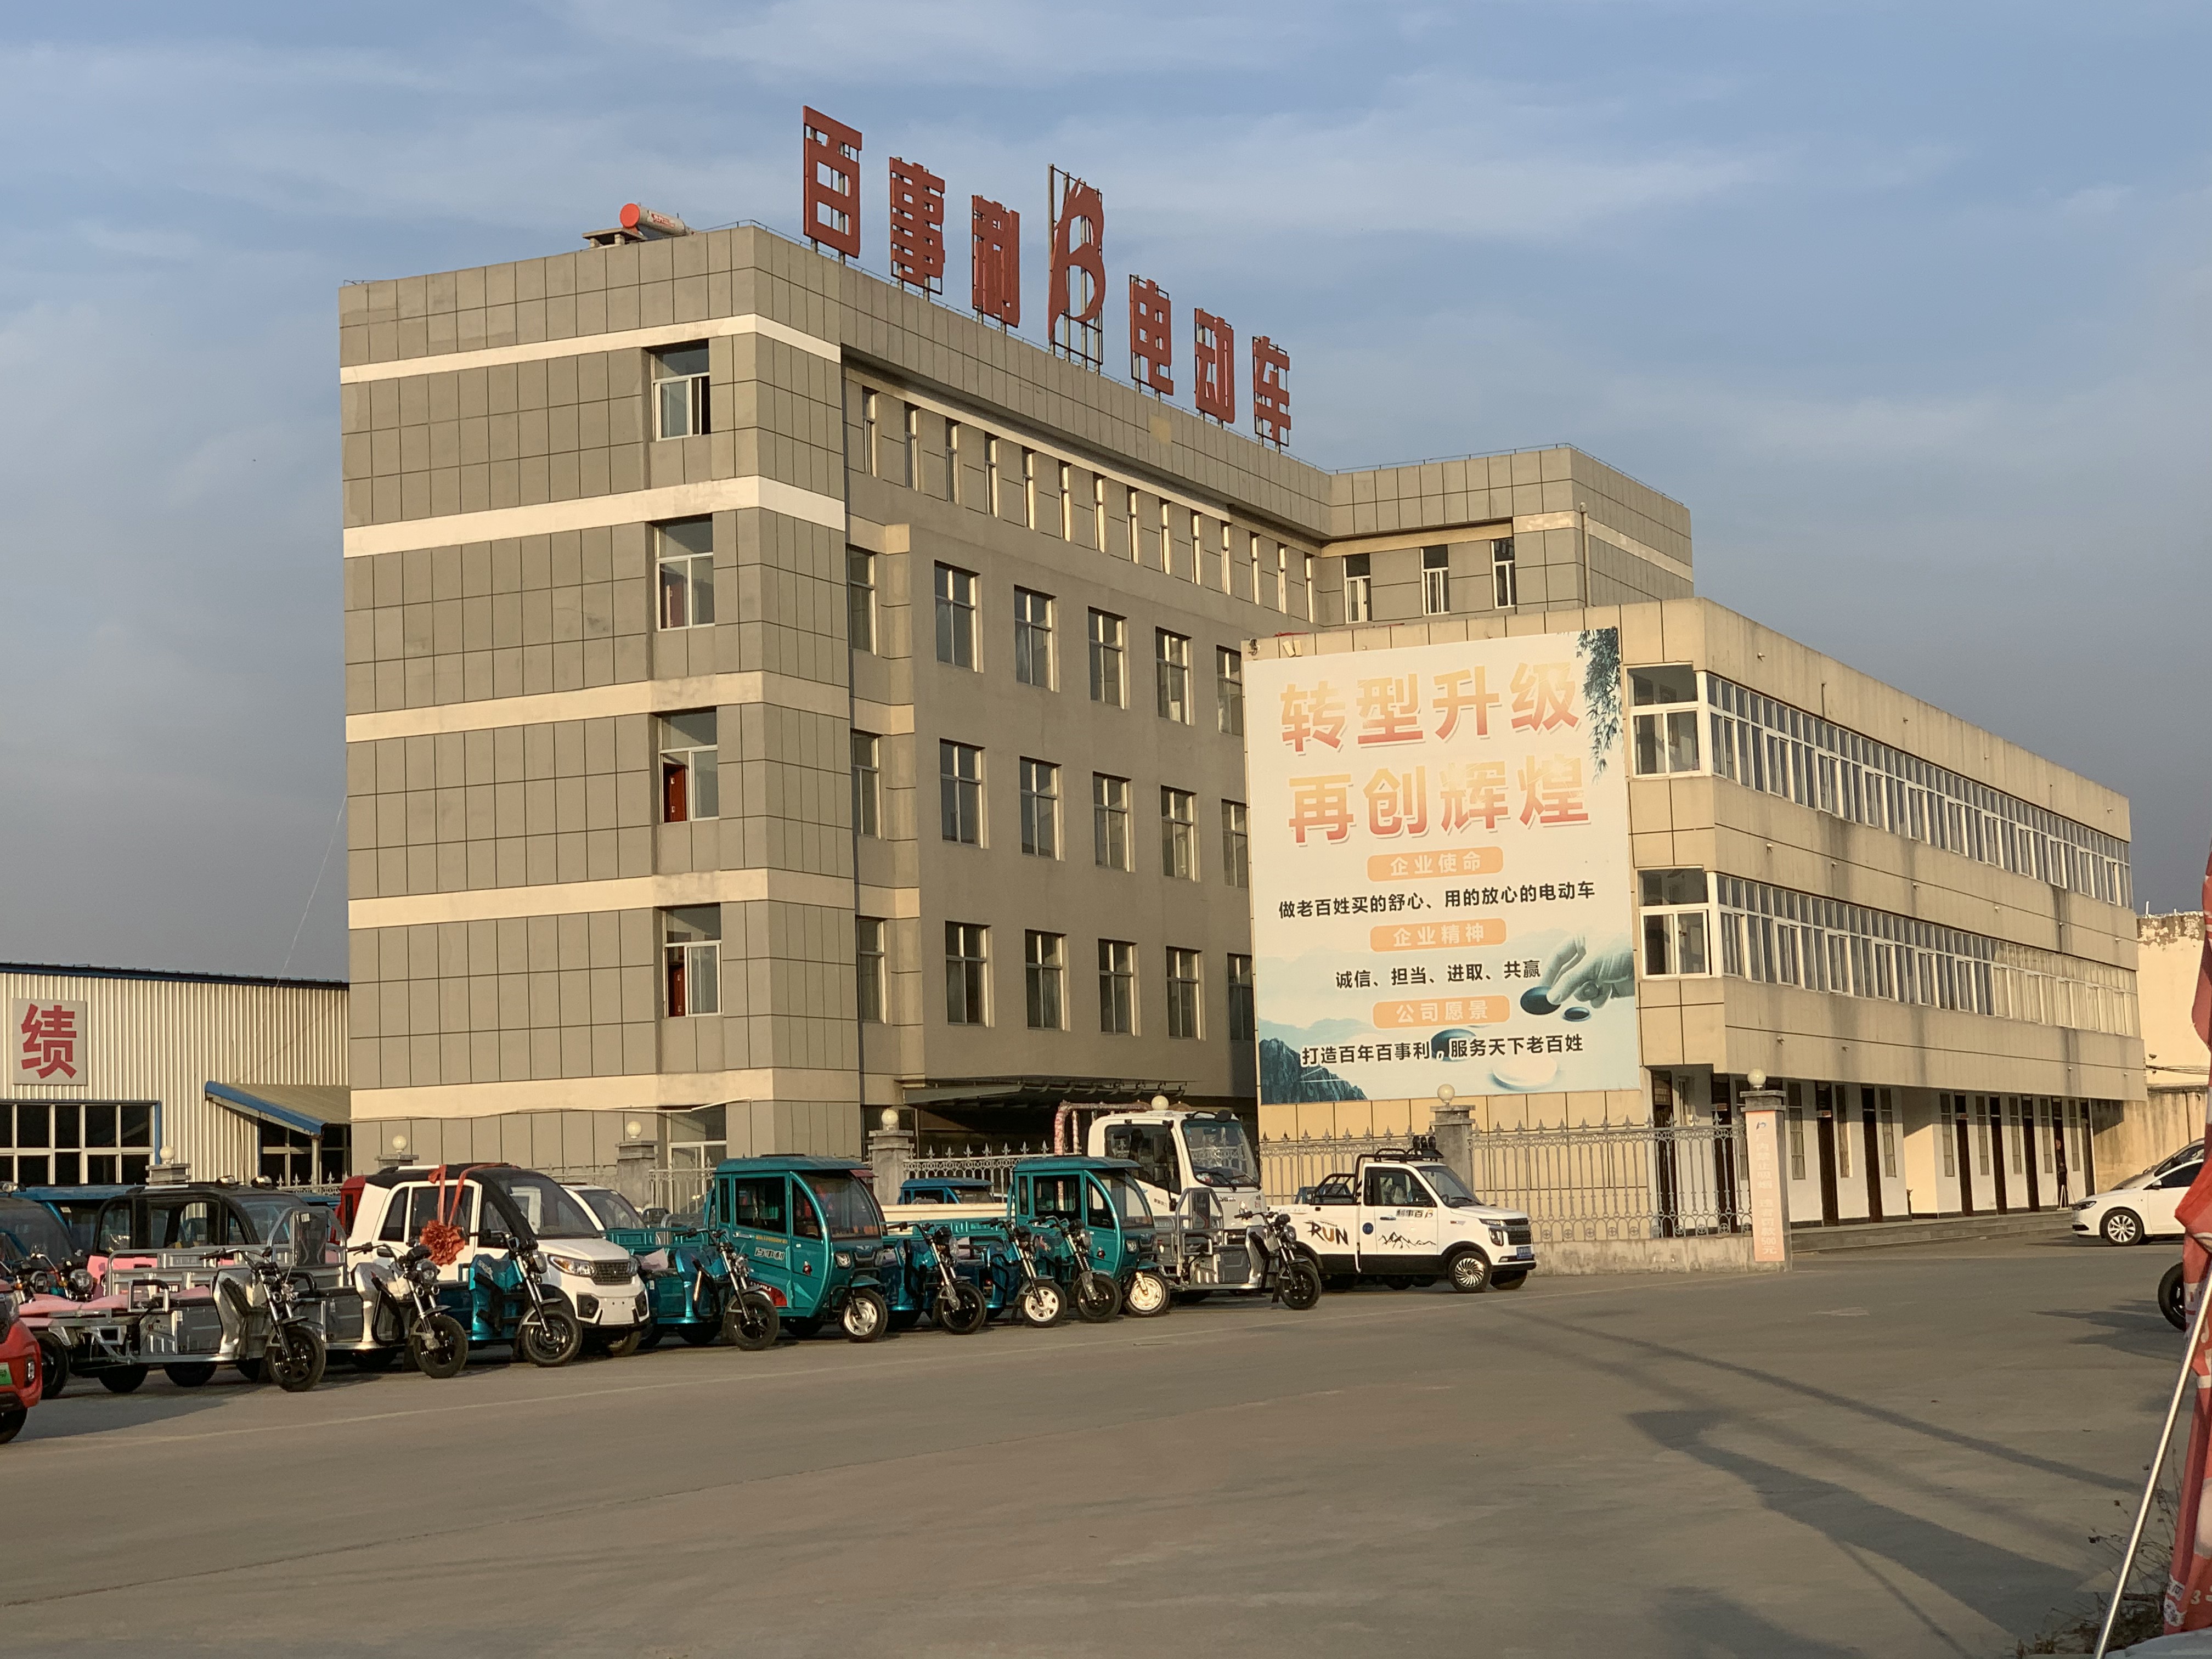 Zona della fabbrica di Furinkaevcar in Cina